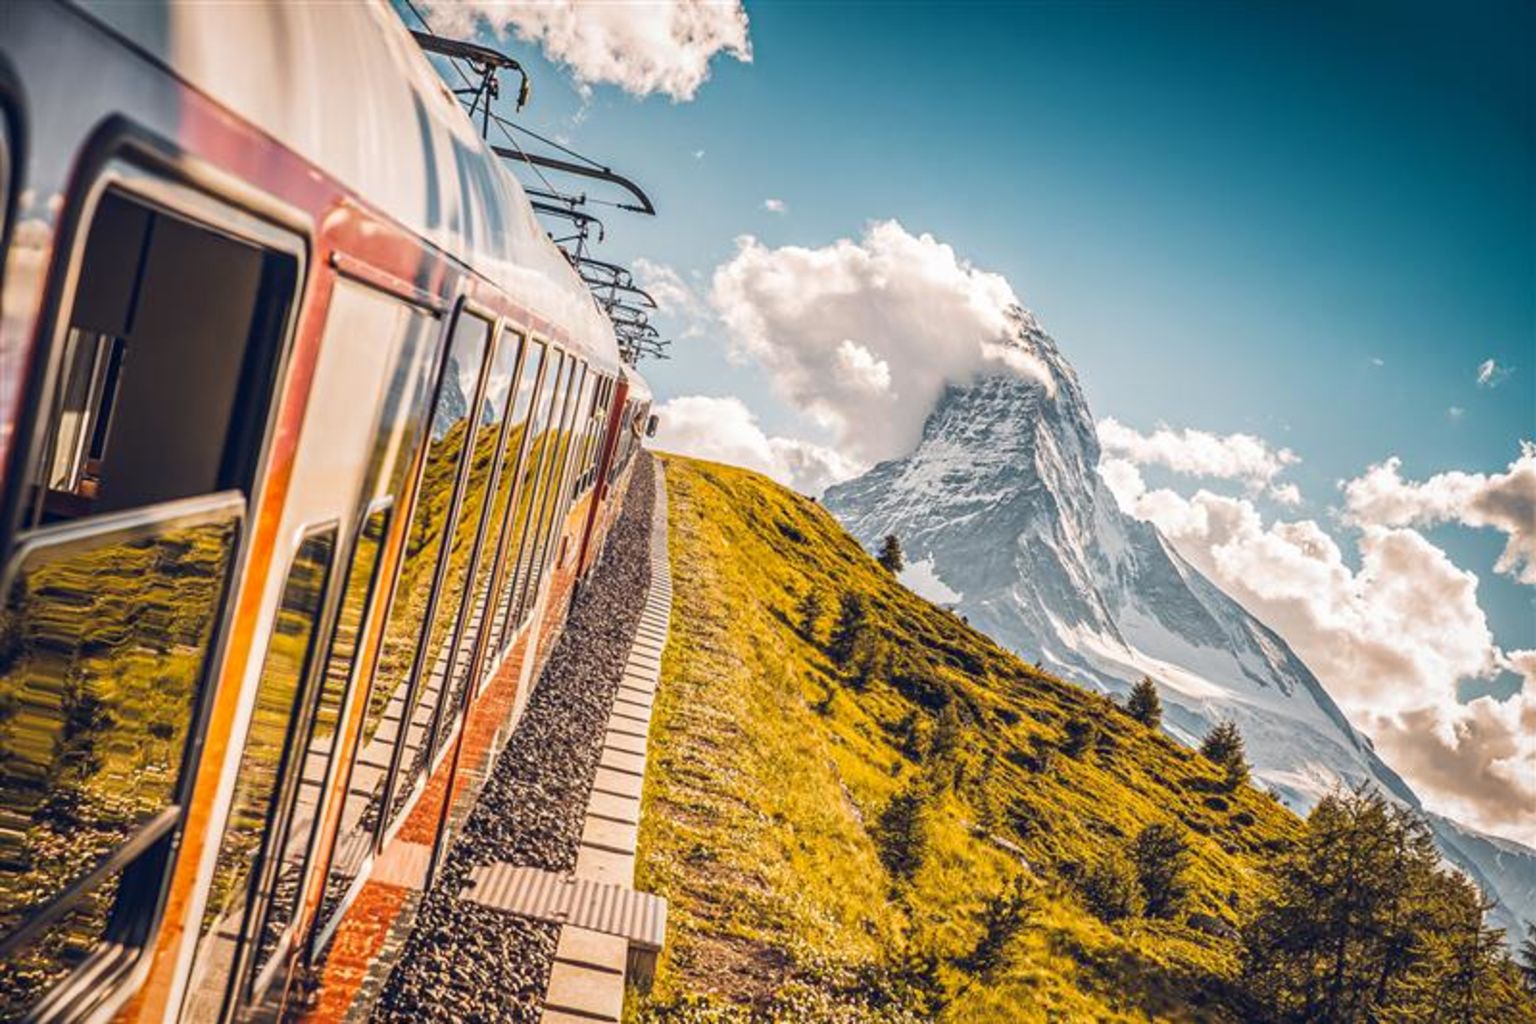 The Gornergrat-Bahn connects Zermatt to the Gornergrat by train. During the journey, the passengers have a magnificent view of the Matterhorn. Valais. Switzerland